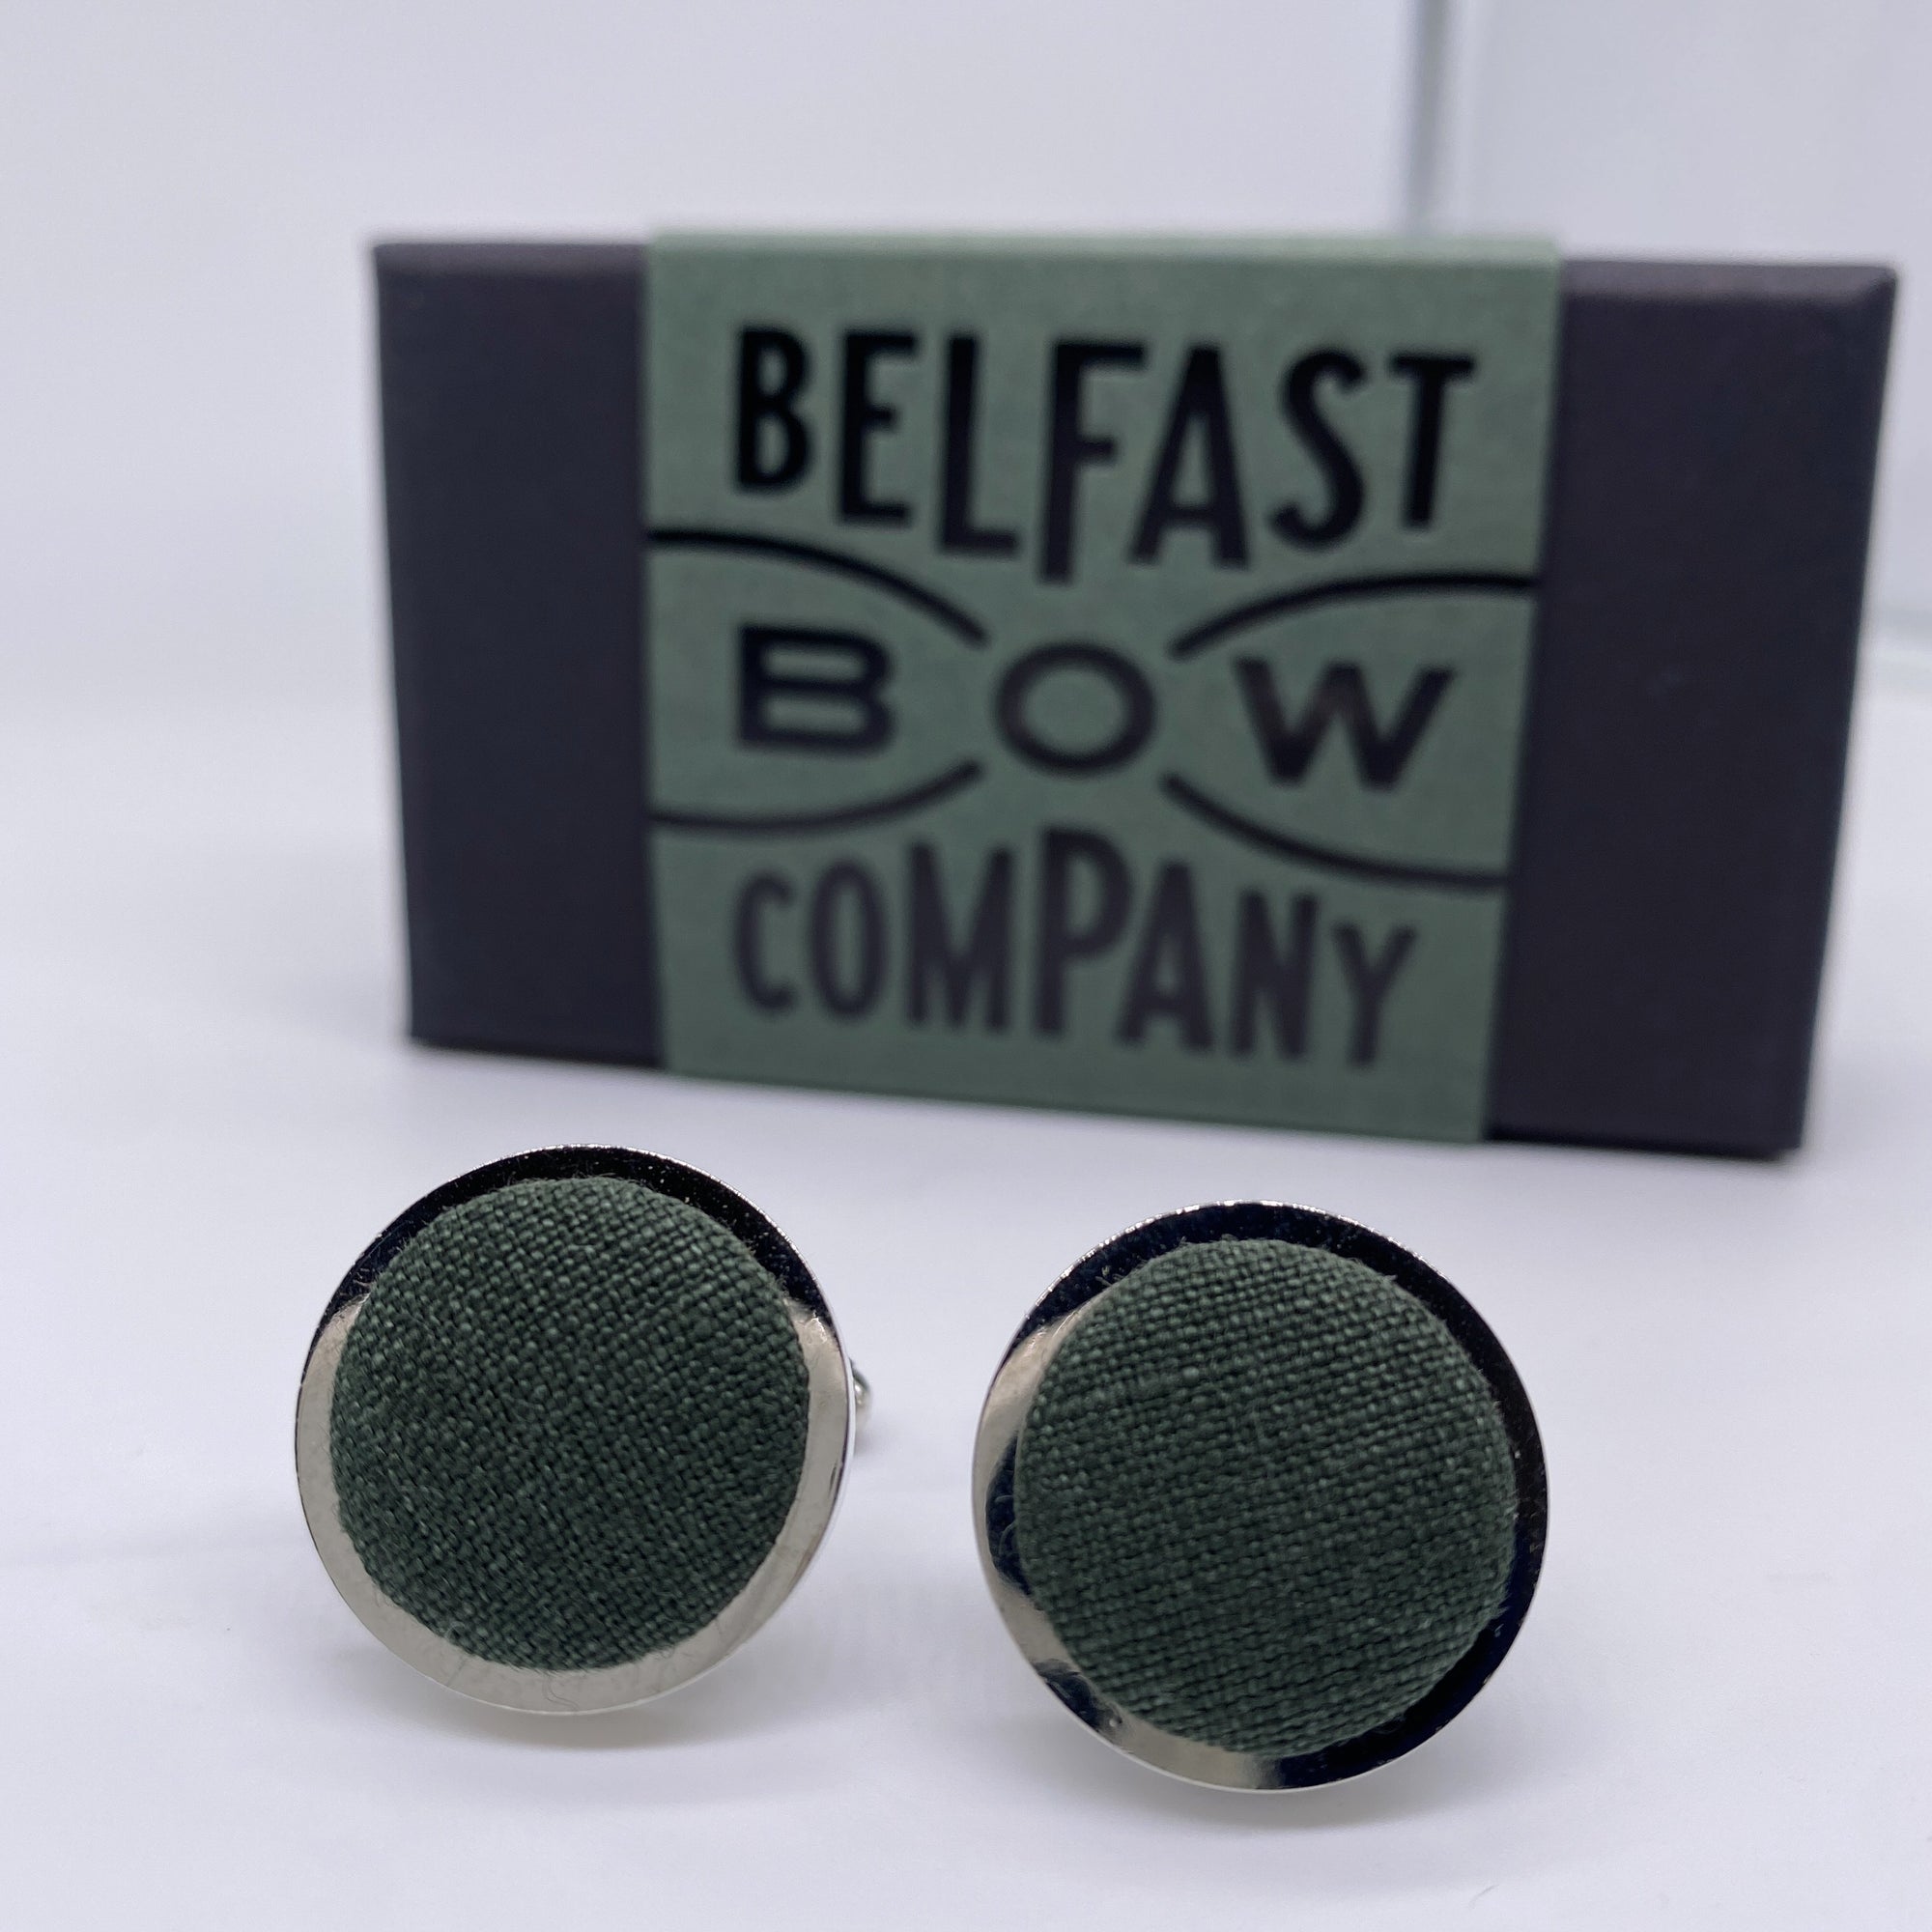 Ivy Green Cufflinks in Irish Linen by the Belfast Bow Company